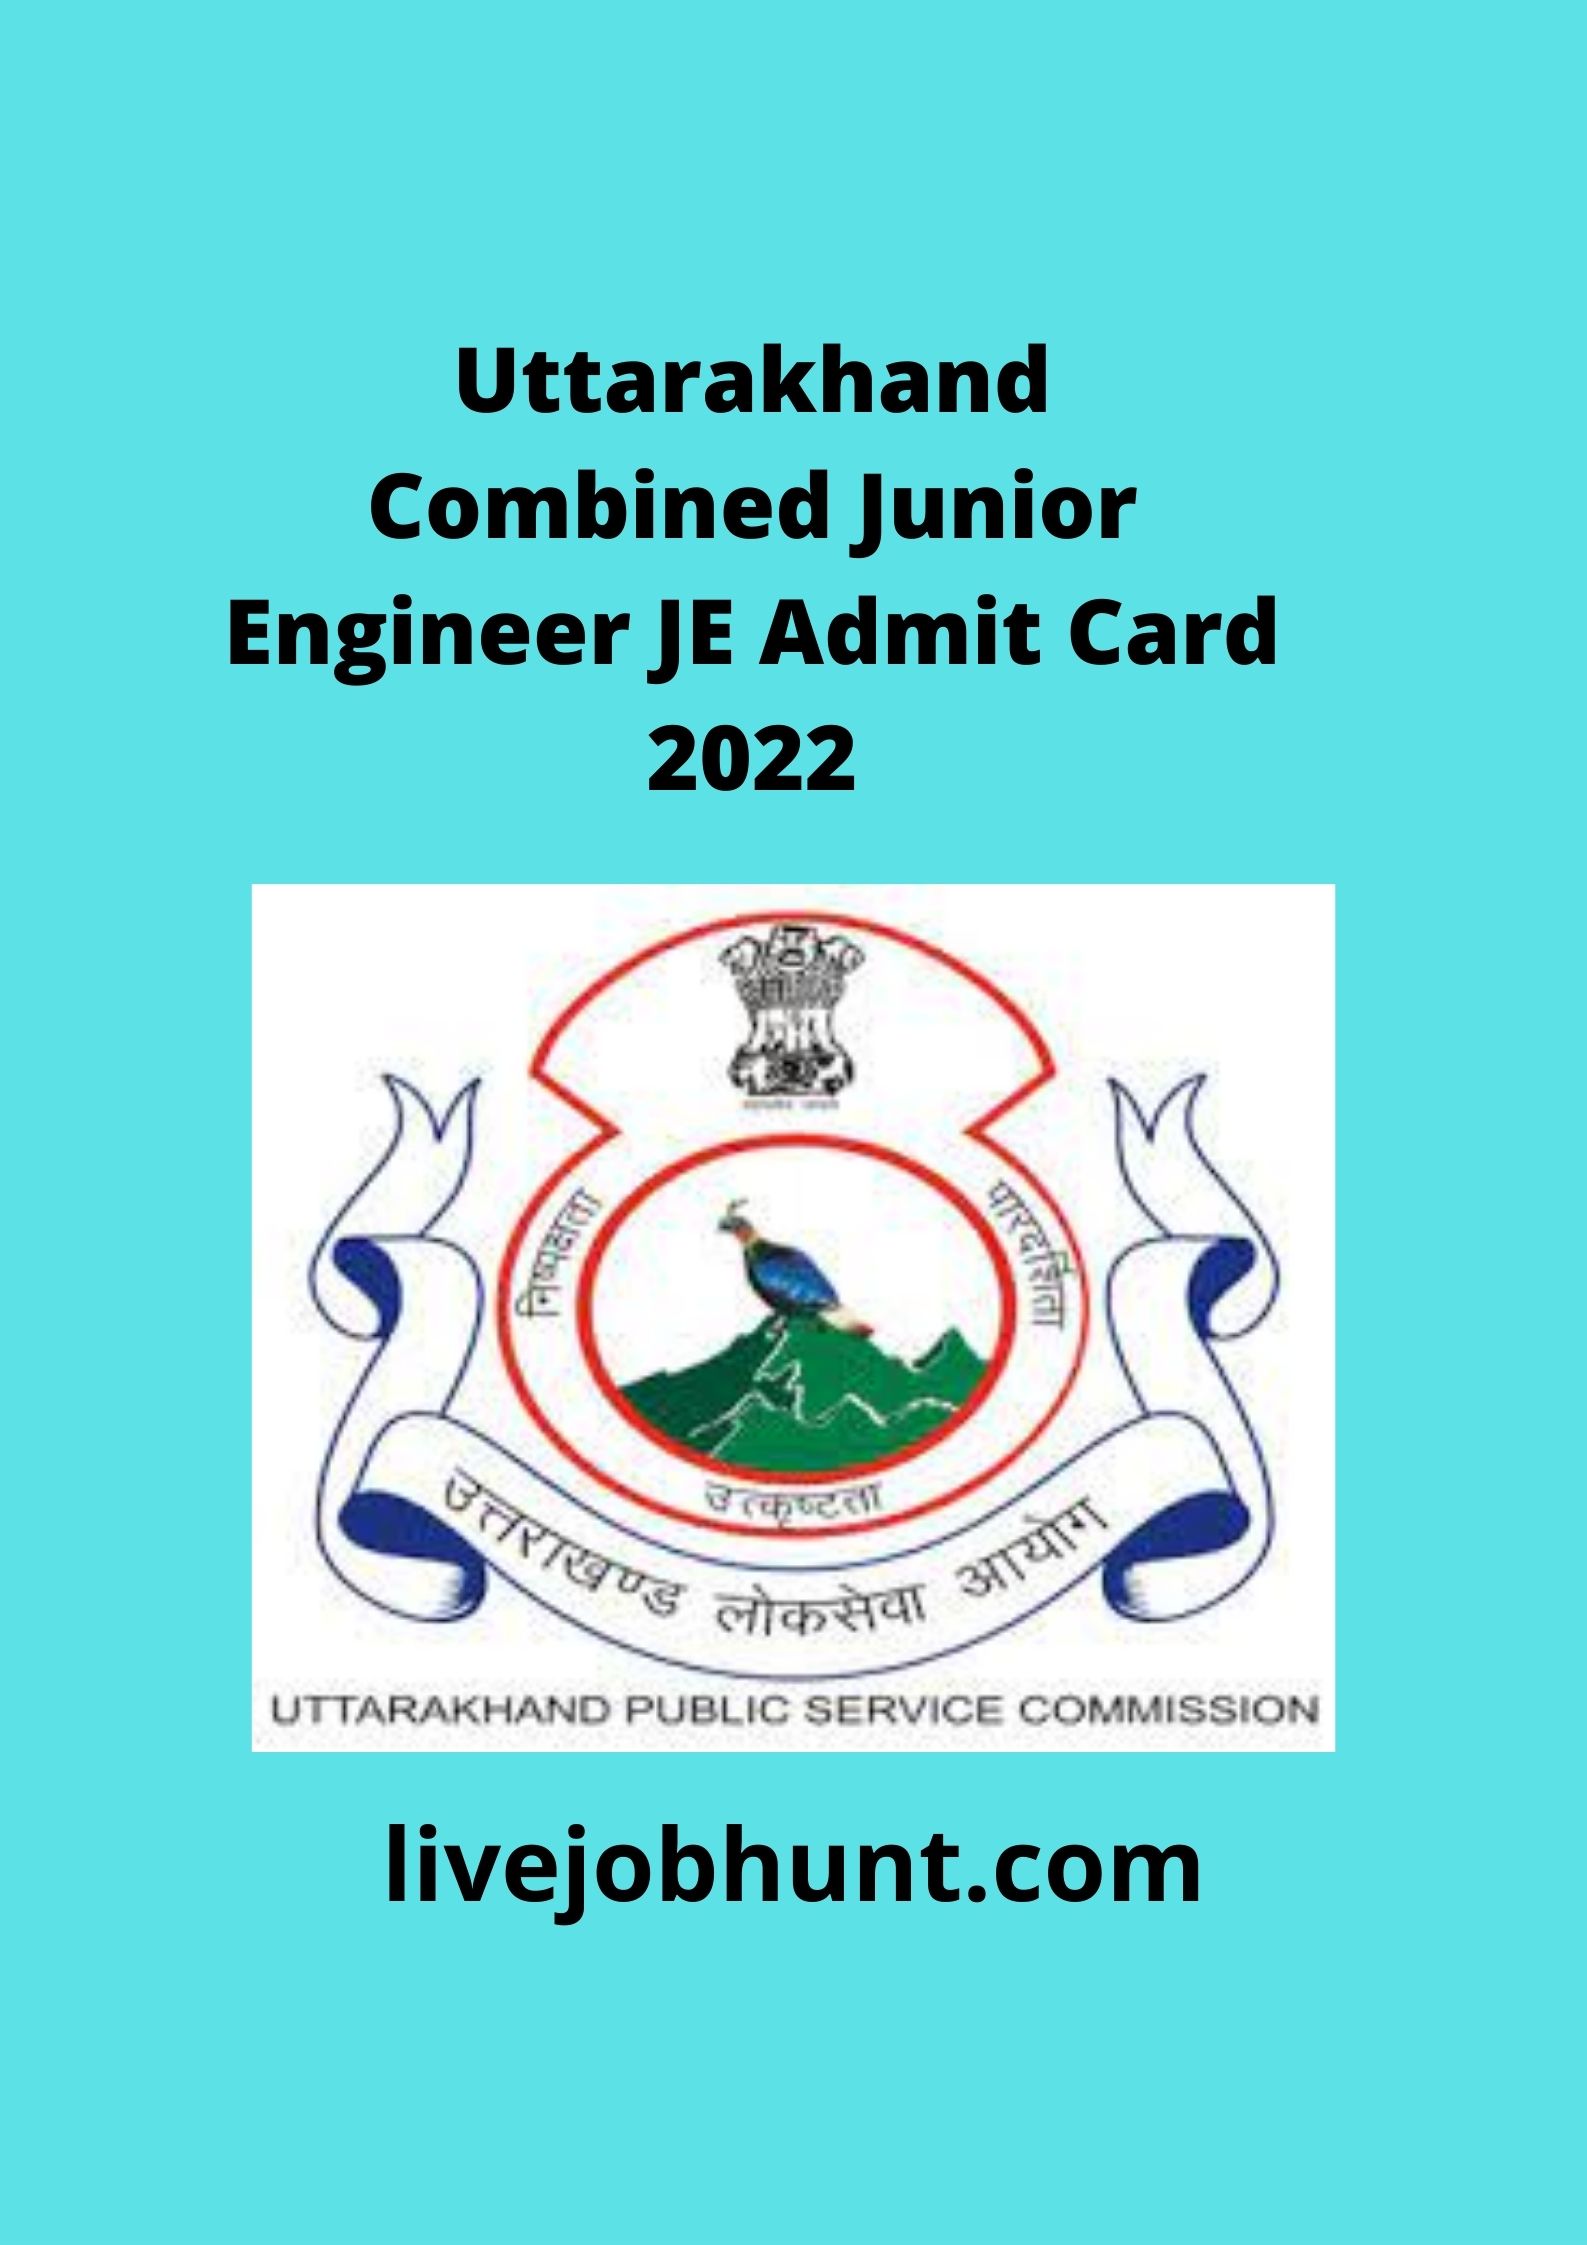 Uttarakhand Combined Junior Engineer JE Admit Card 2022